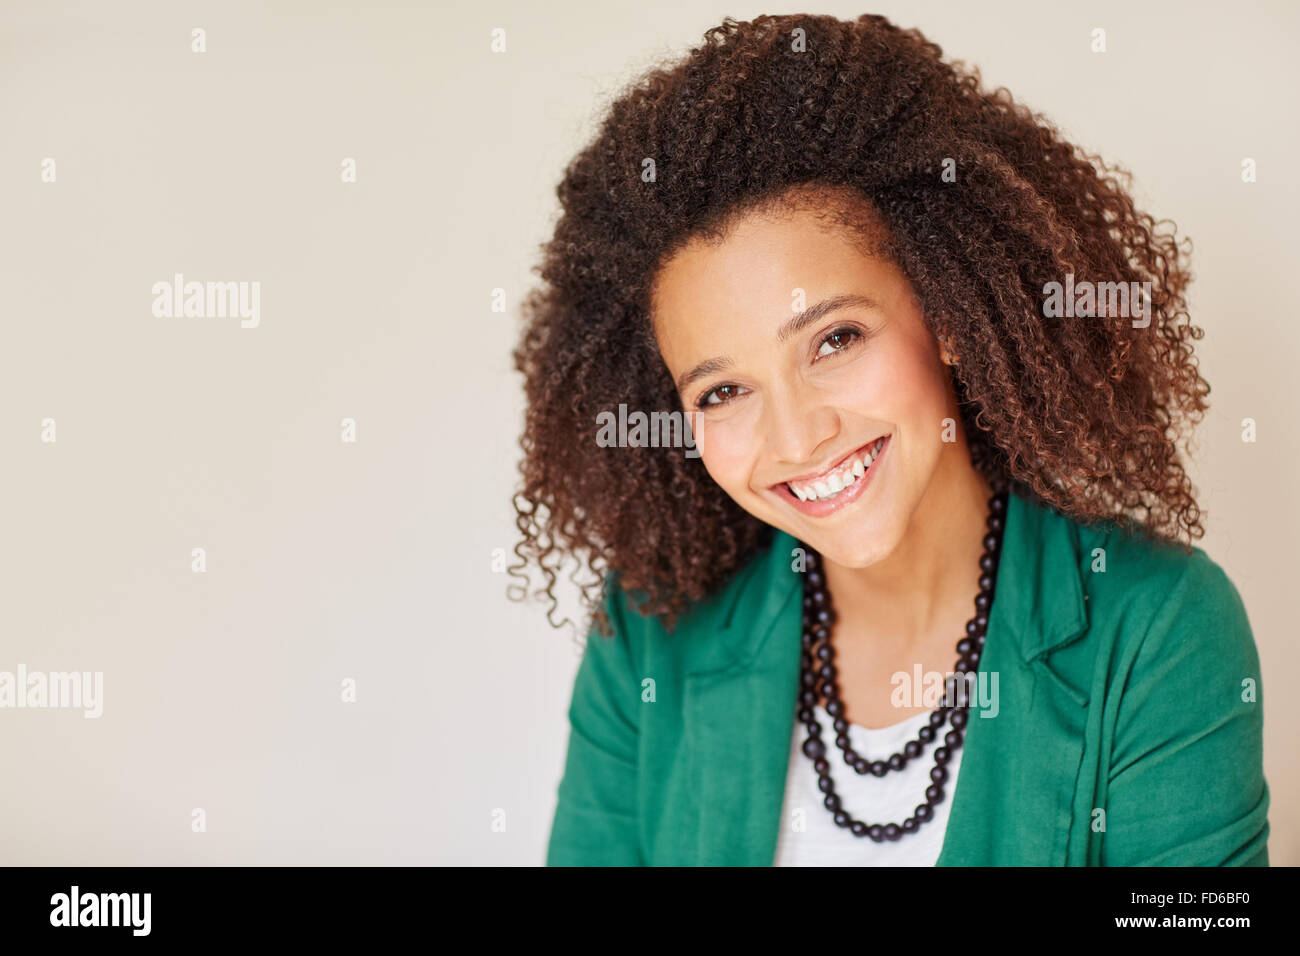 Razza mista imprenditrice con una parentesi afro calorosamente sorridente Foto Stock